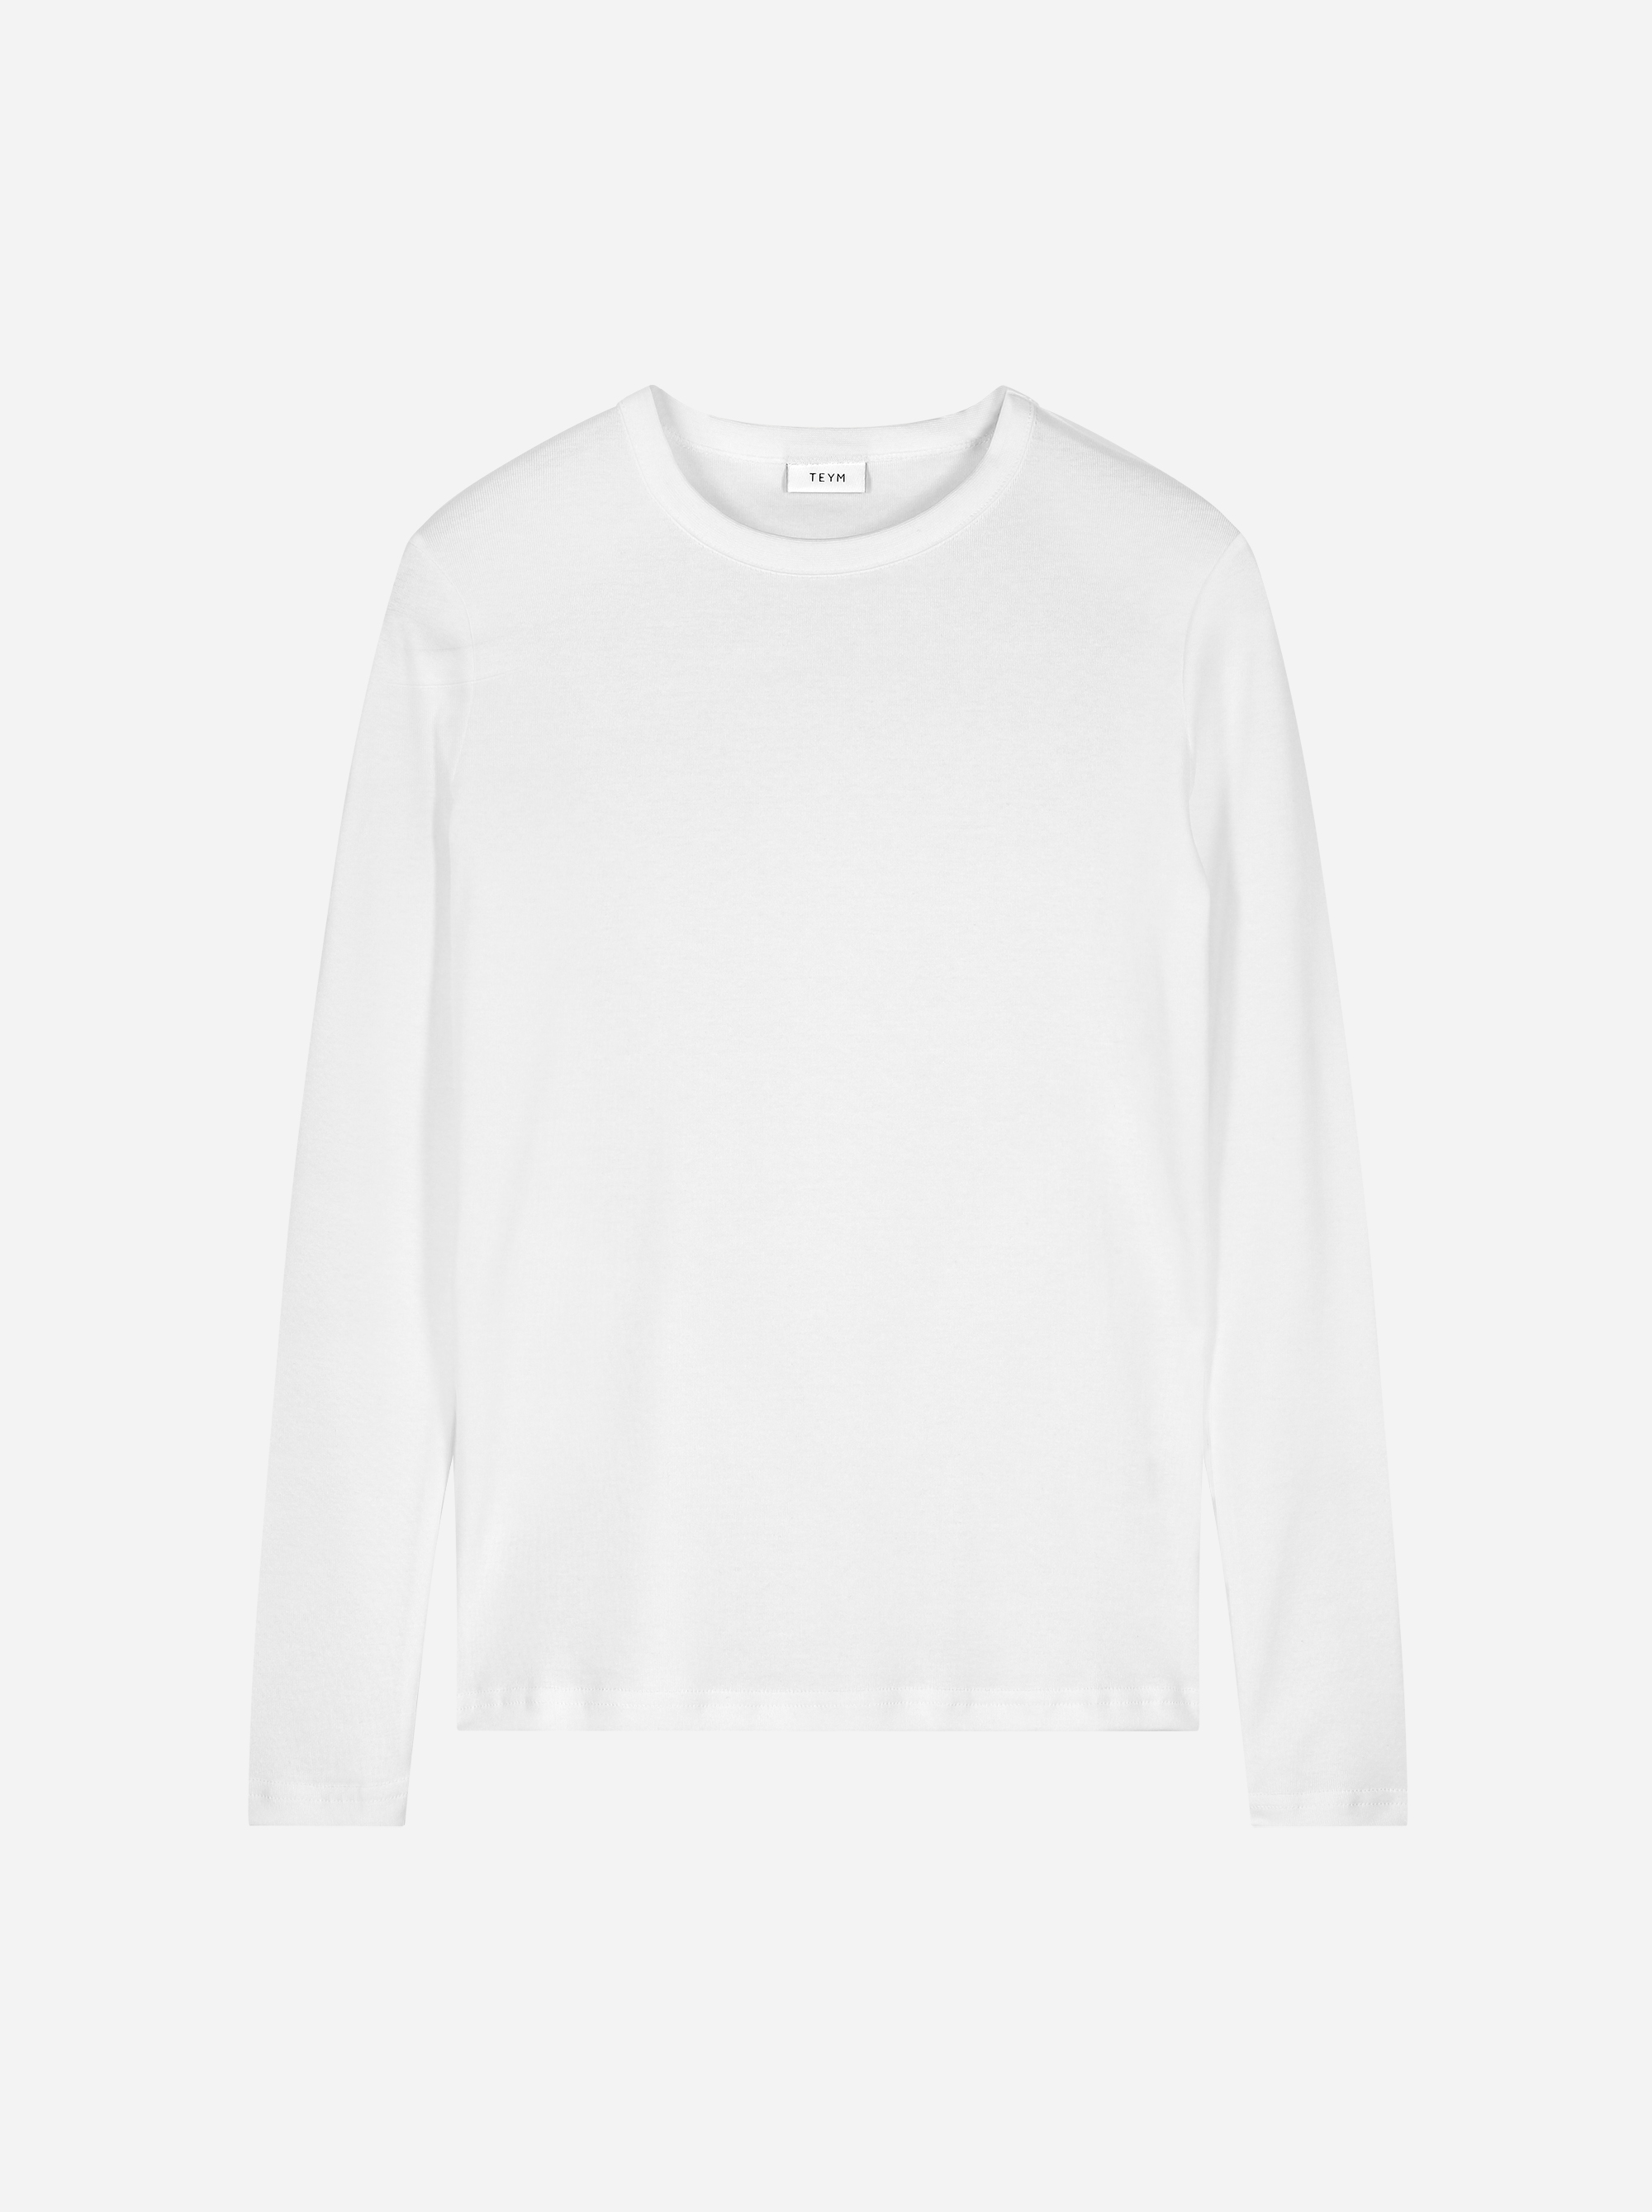 Teym_The Longsleeve T-Shirt_white_female_front_1B